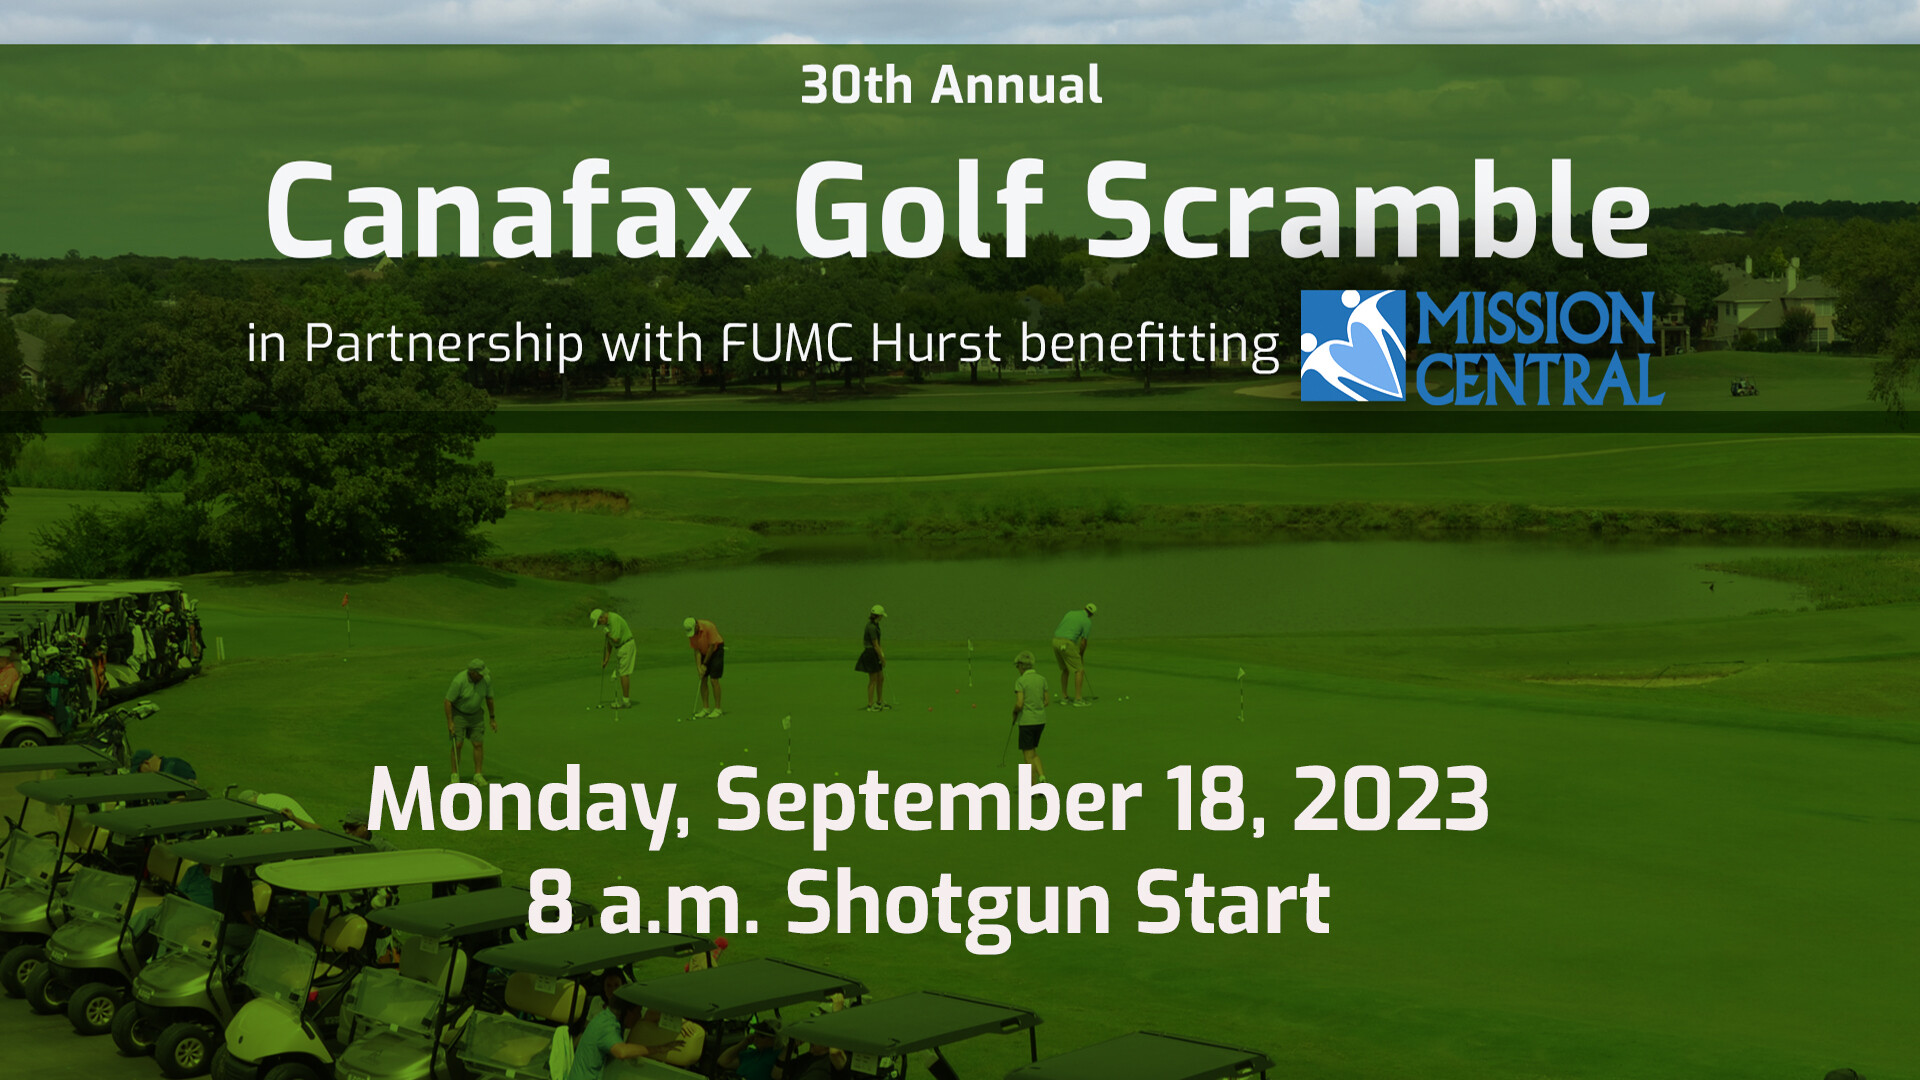 Canafax Golf Scramble Registration